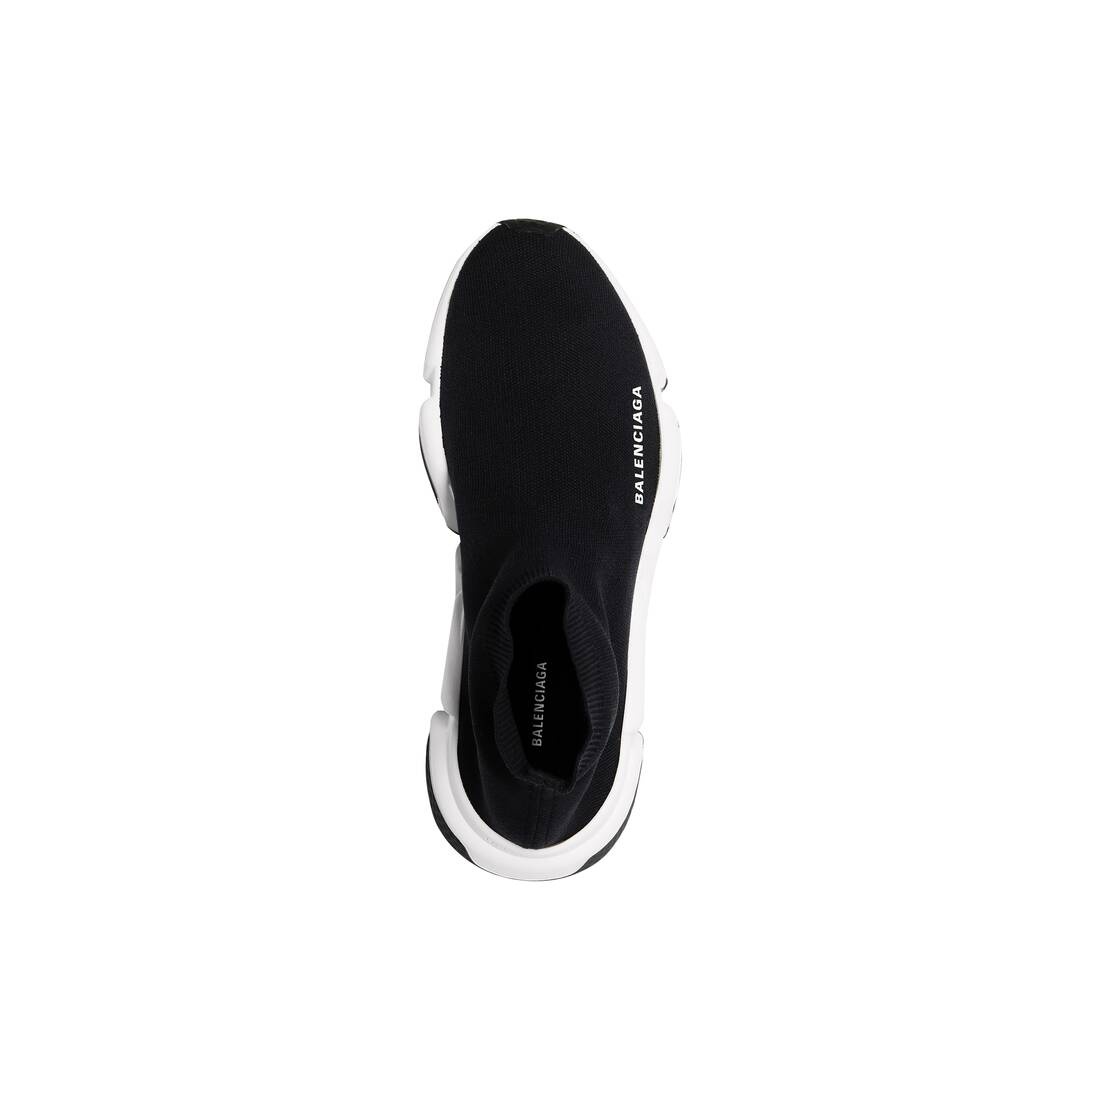 Men's Speed Recycled Knit Sneaker in Black/white - 4